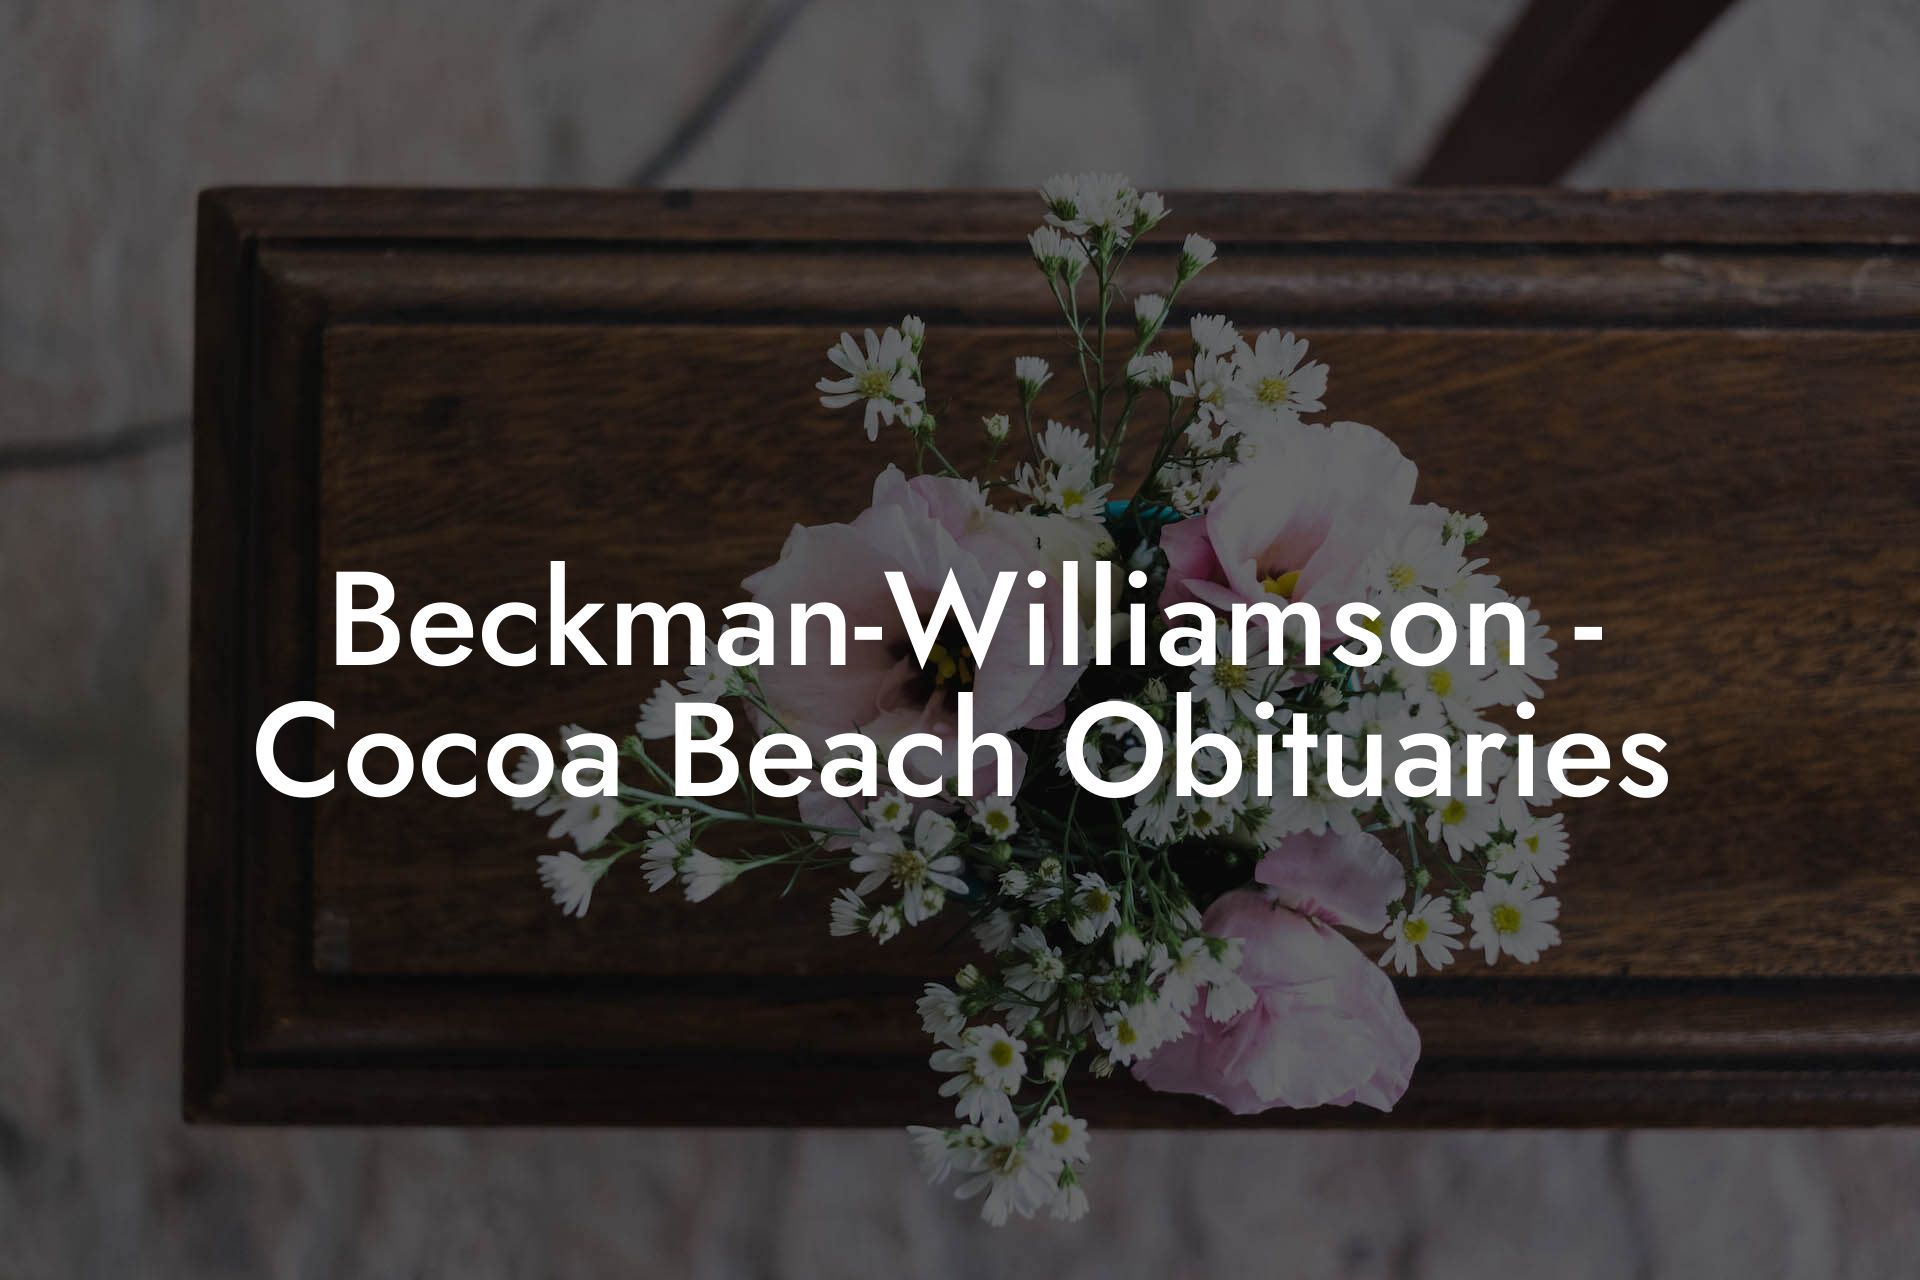 Beckman-Williamson - Cocoa Beach Obituaries